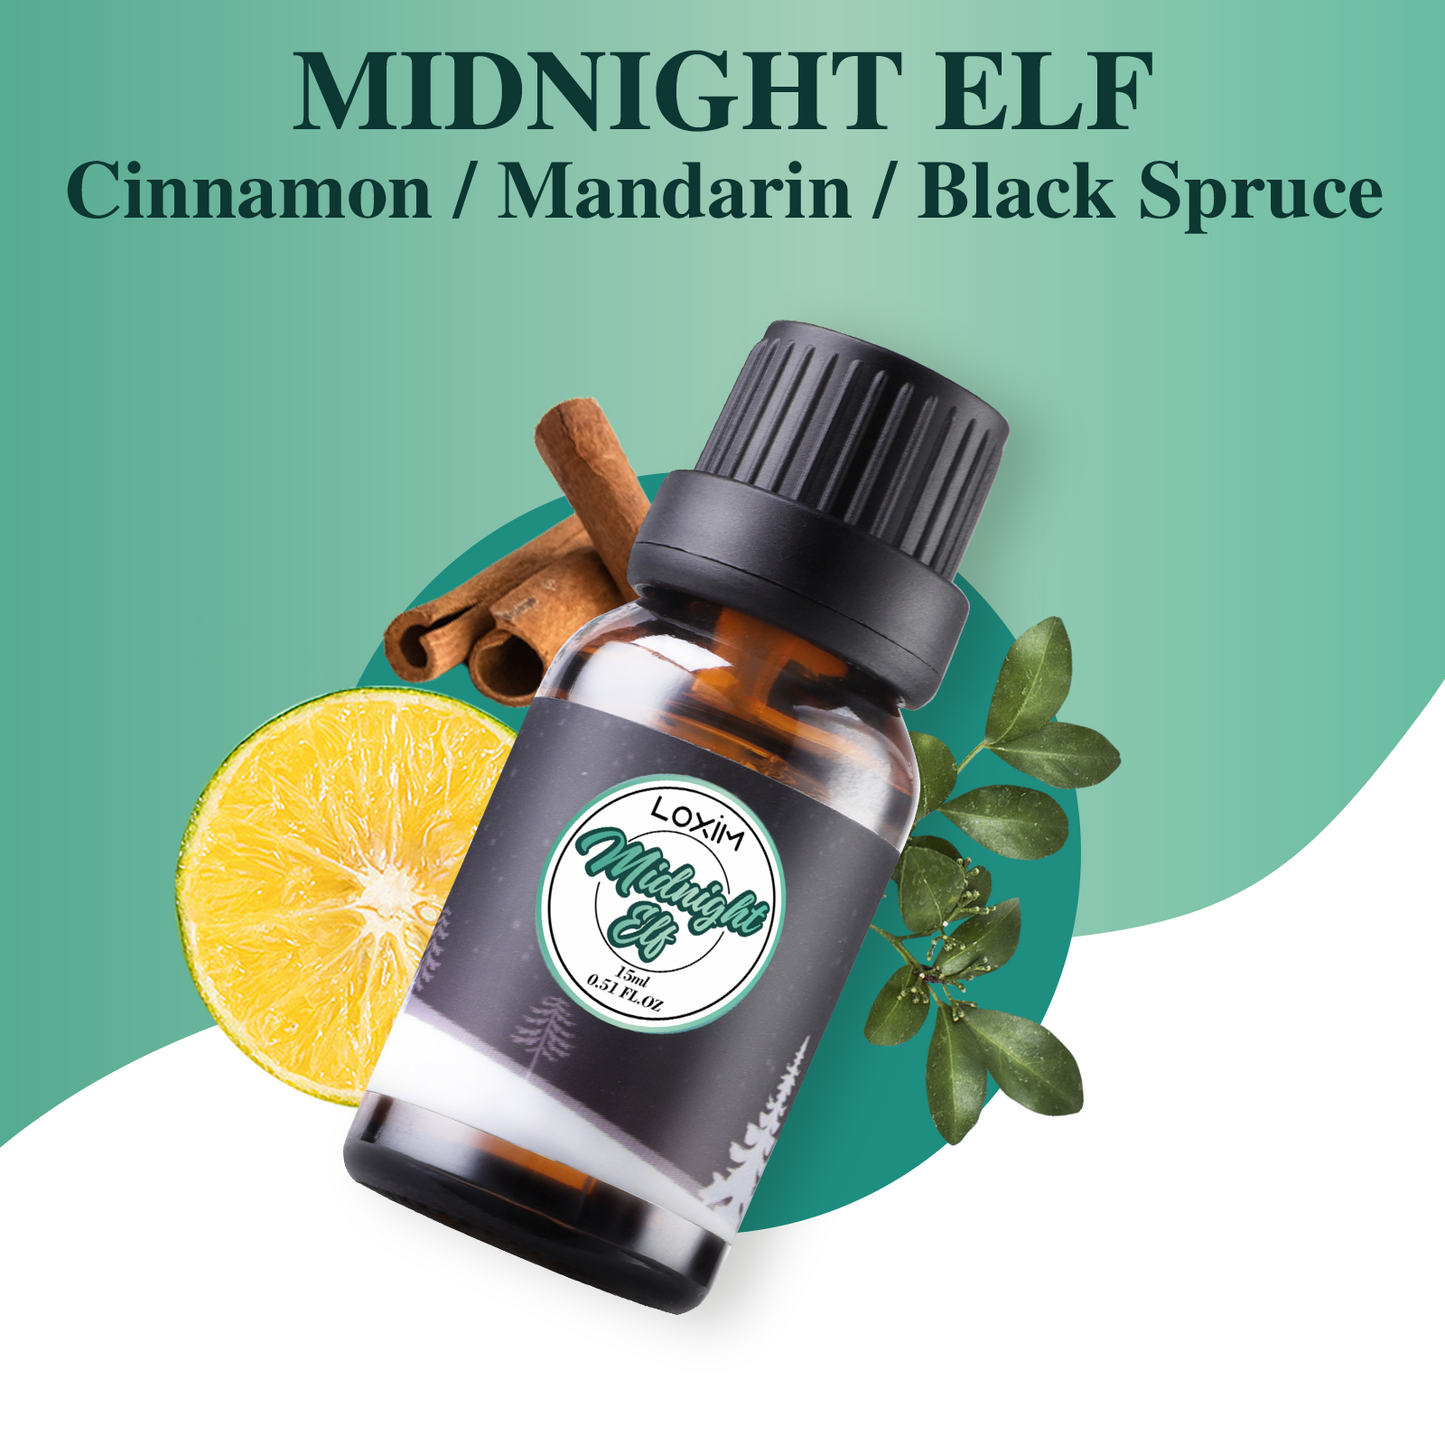 LOXIM Pride Aroma Diffuser Black & Midnight Elf Essential Oil Set Blend 15ml